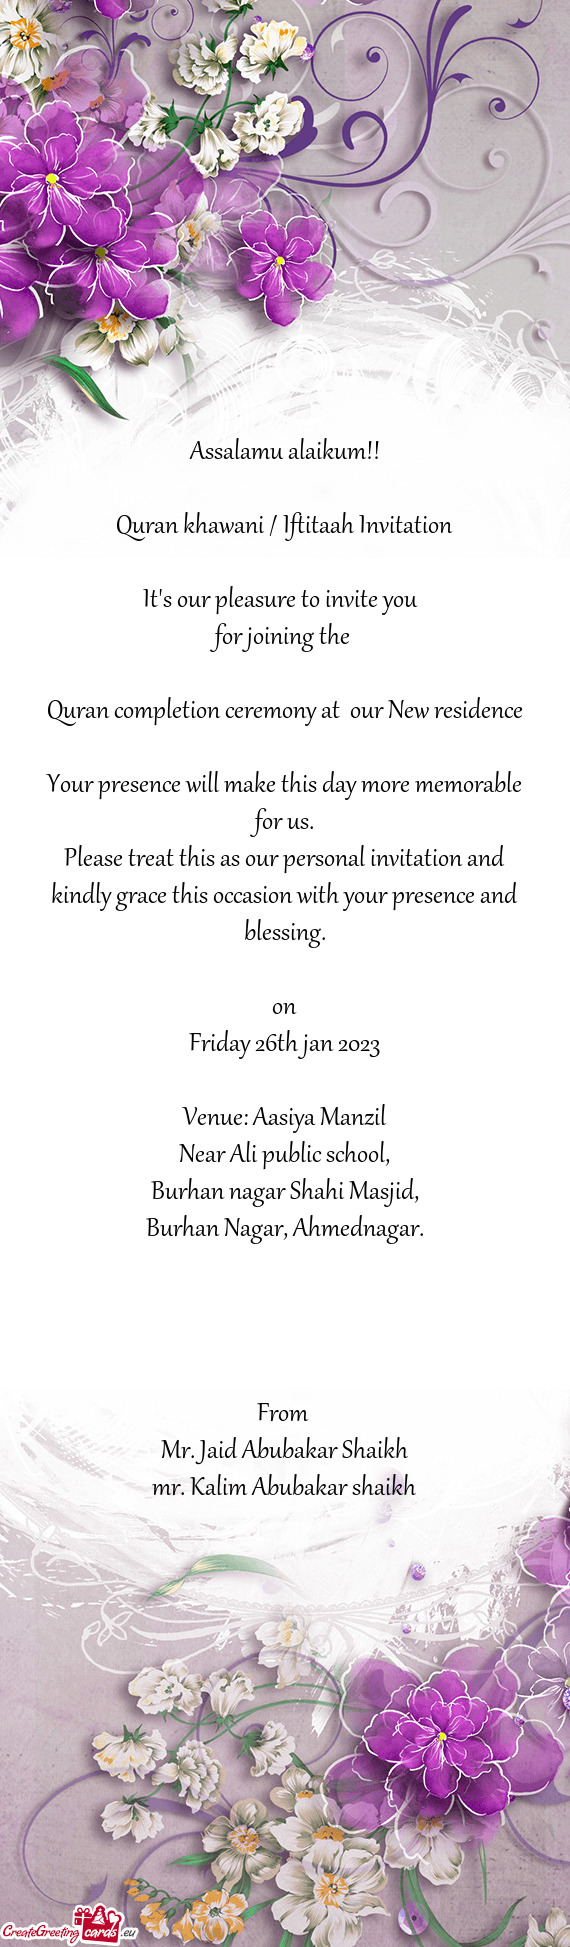 Quran khawani / Iftitaah Invitation